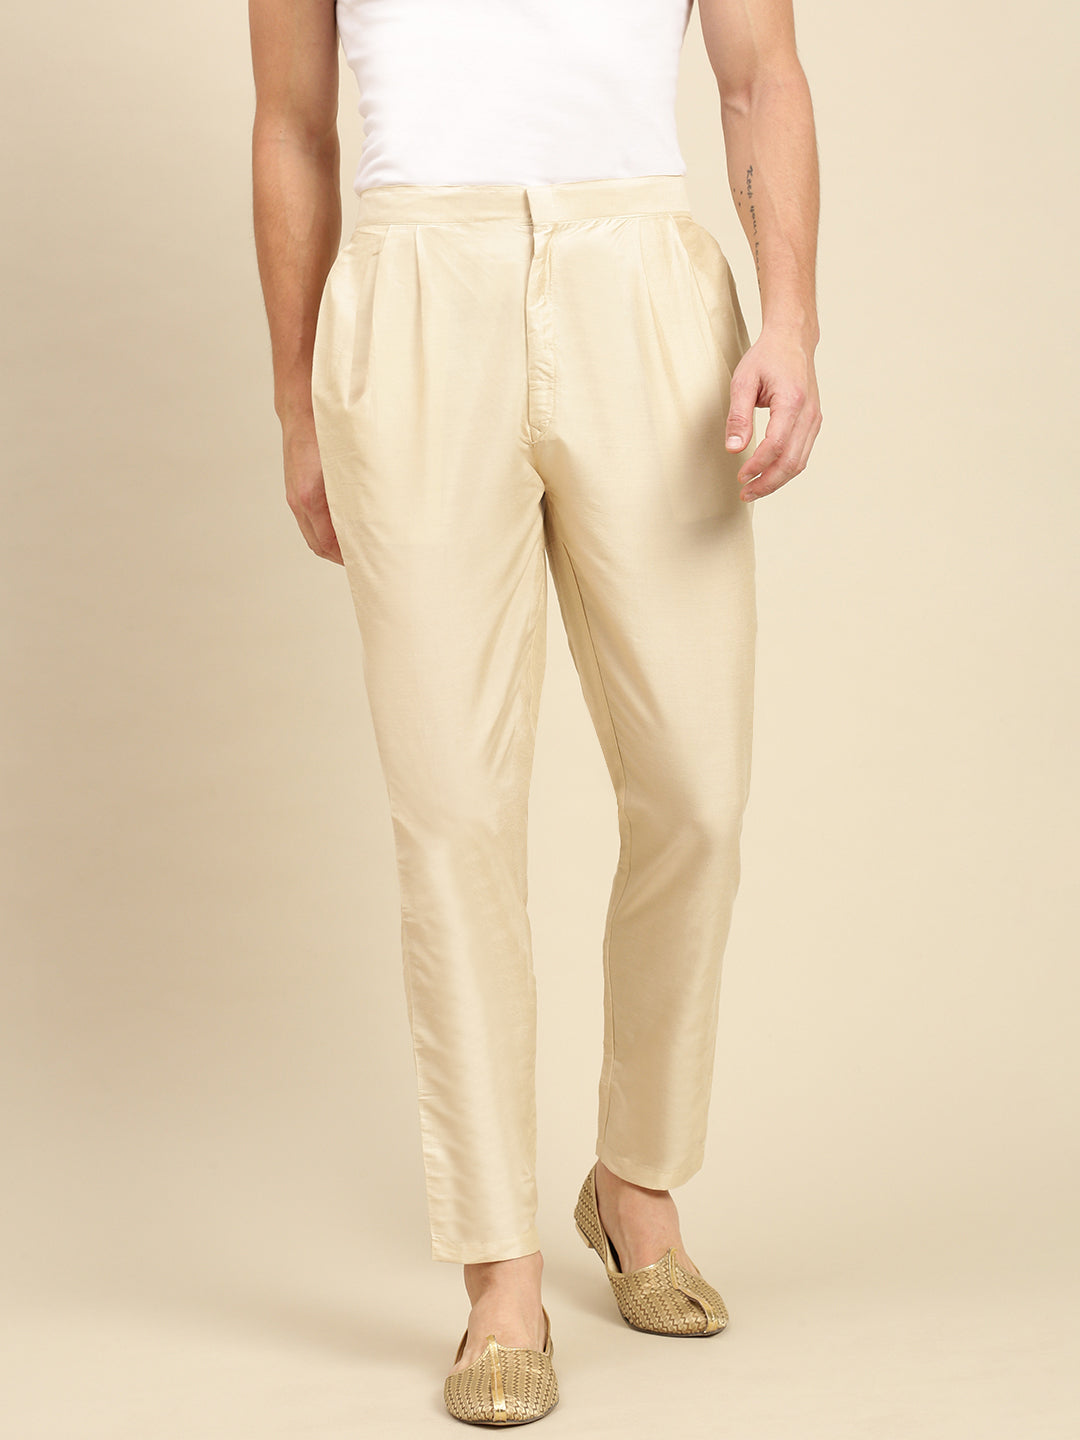 Sanwara Men's Solid Light Beige Colour Cotton Payjama Style Pant